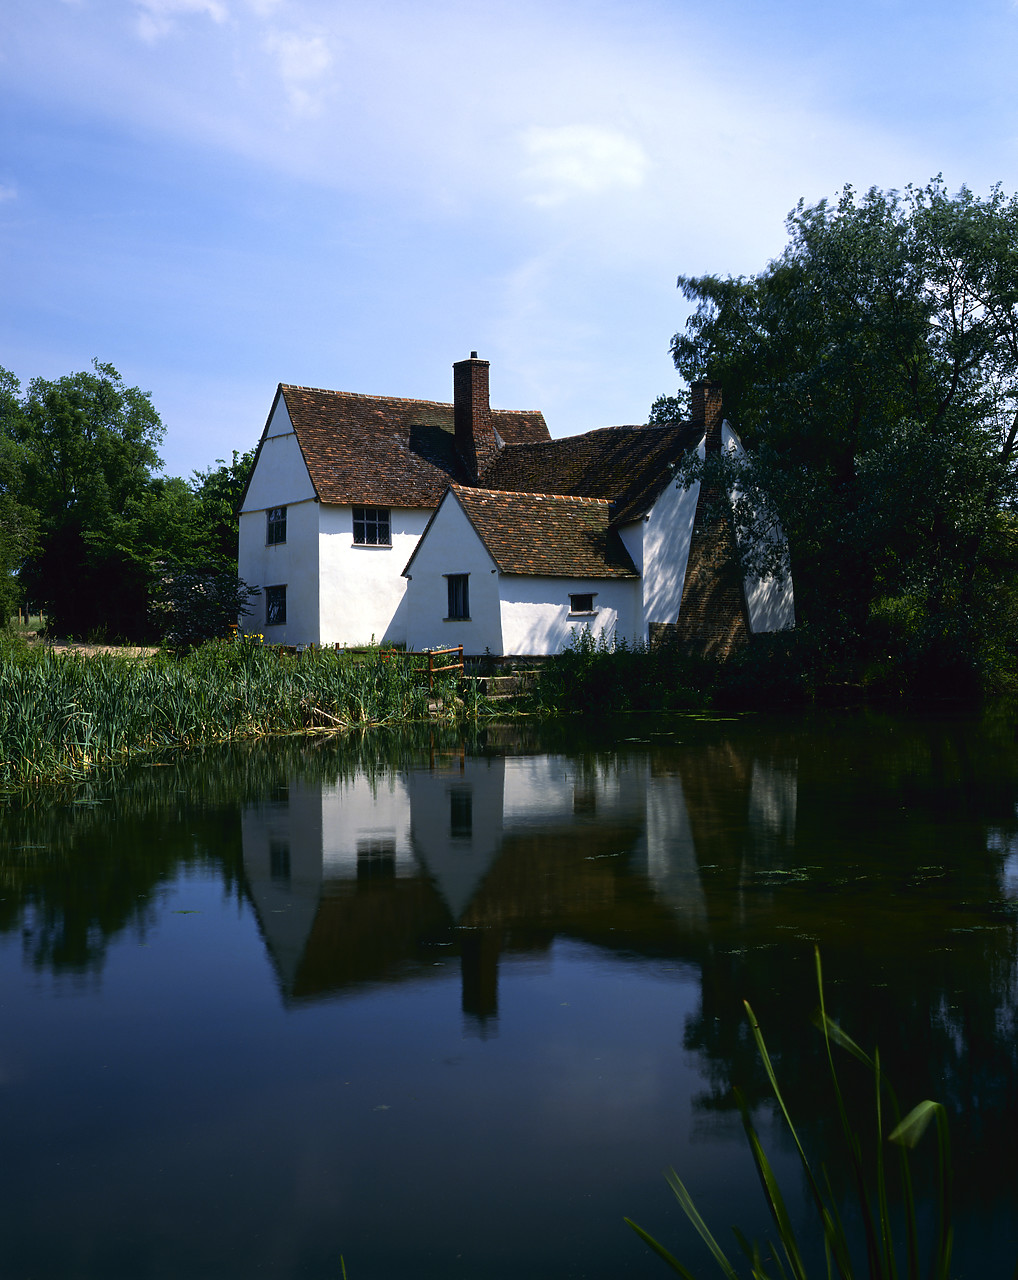 #892247-2 - Willy Lott's Cottage, Flatford, Suffolk, England